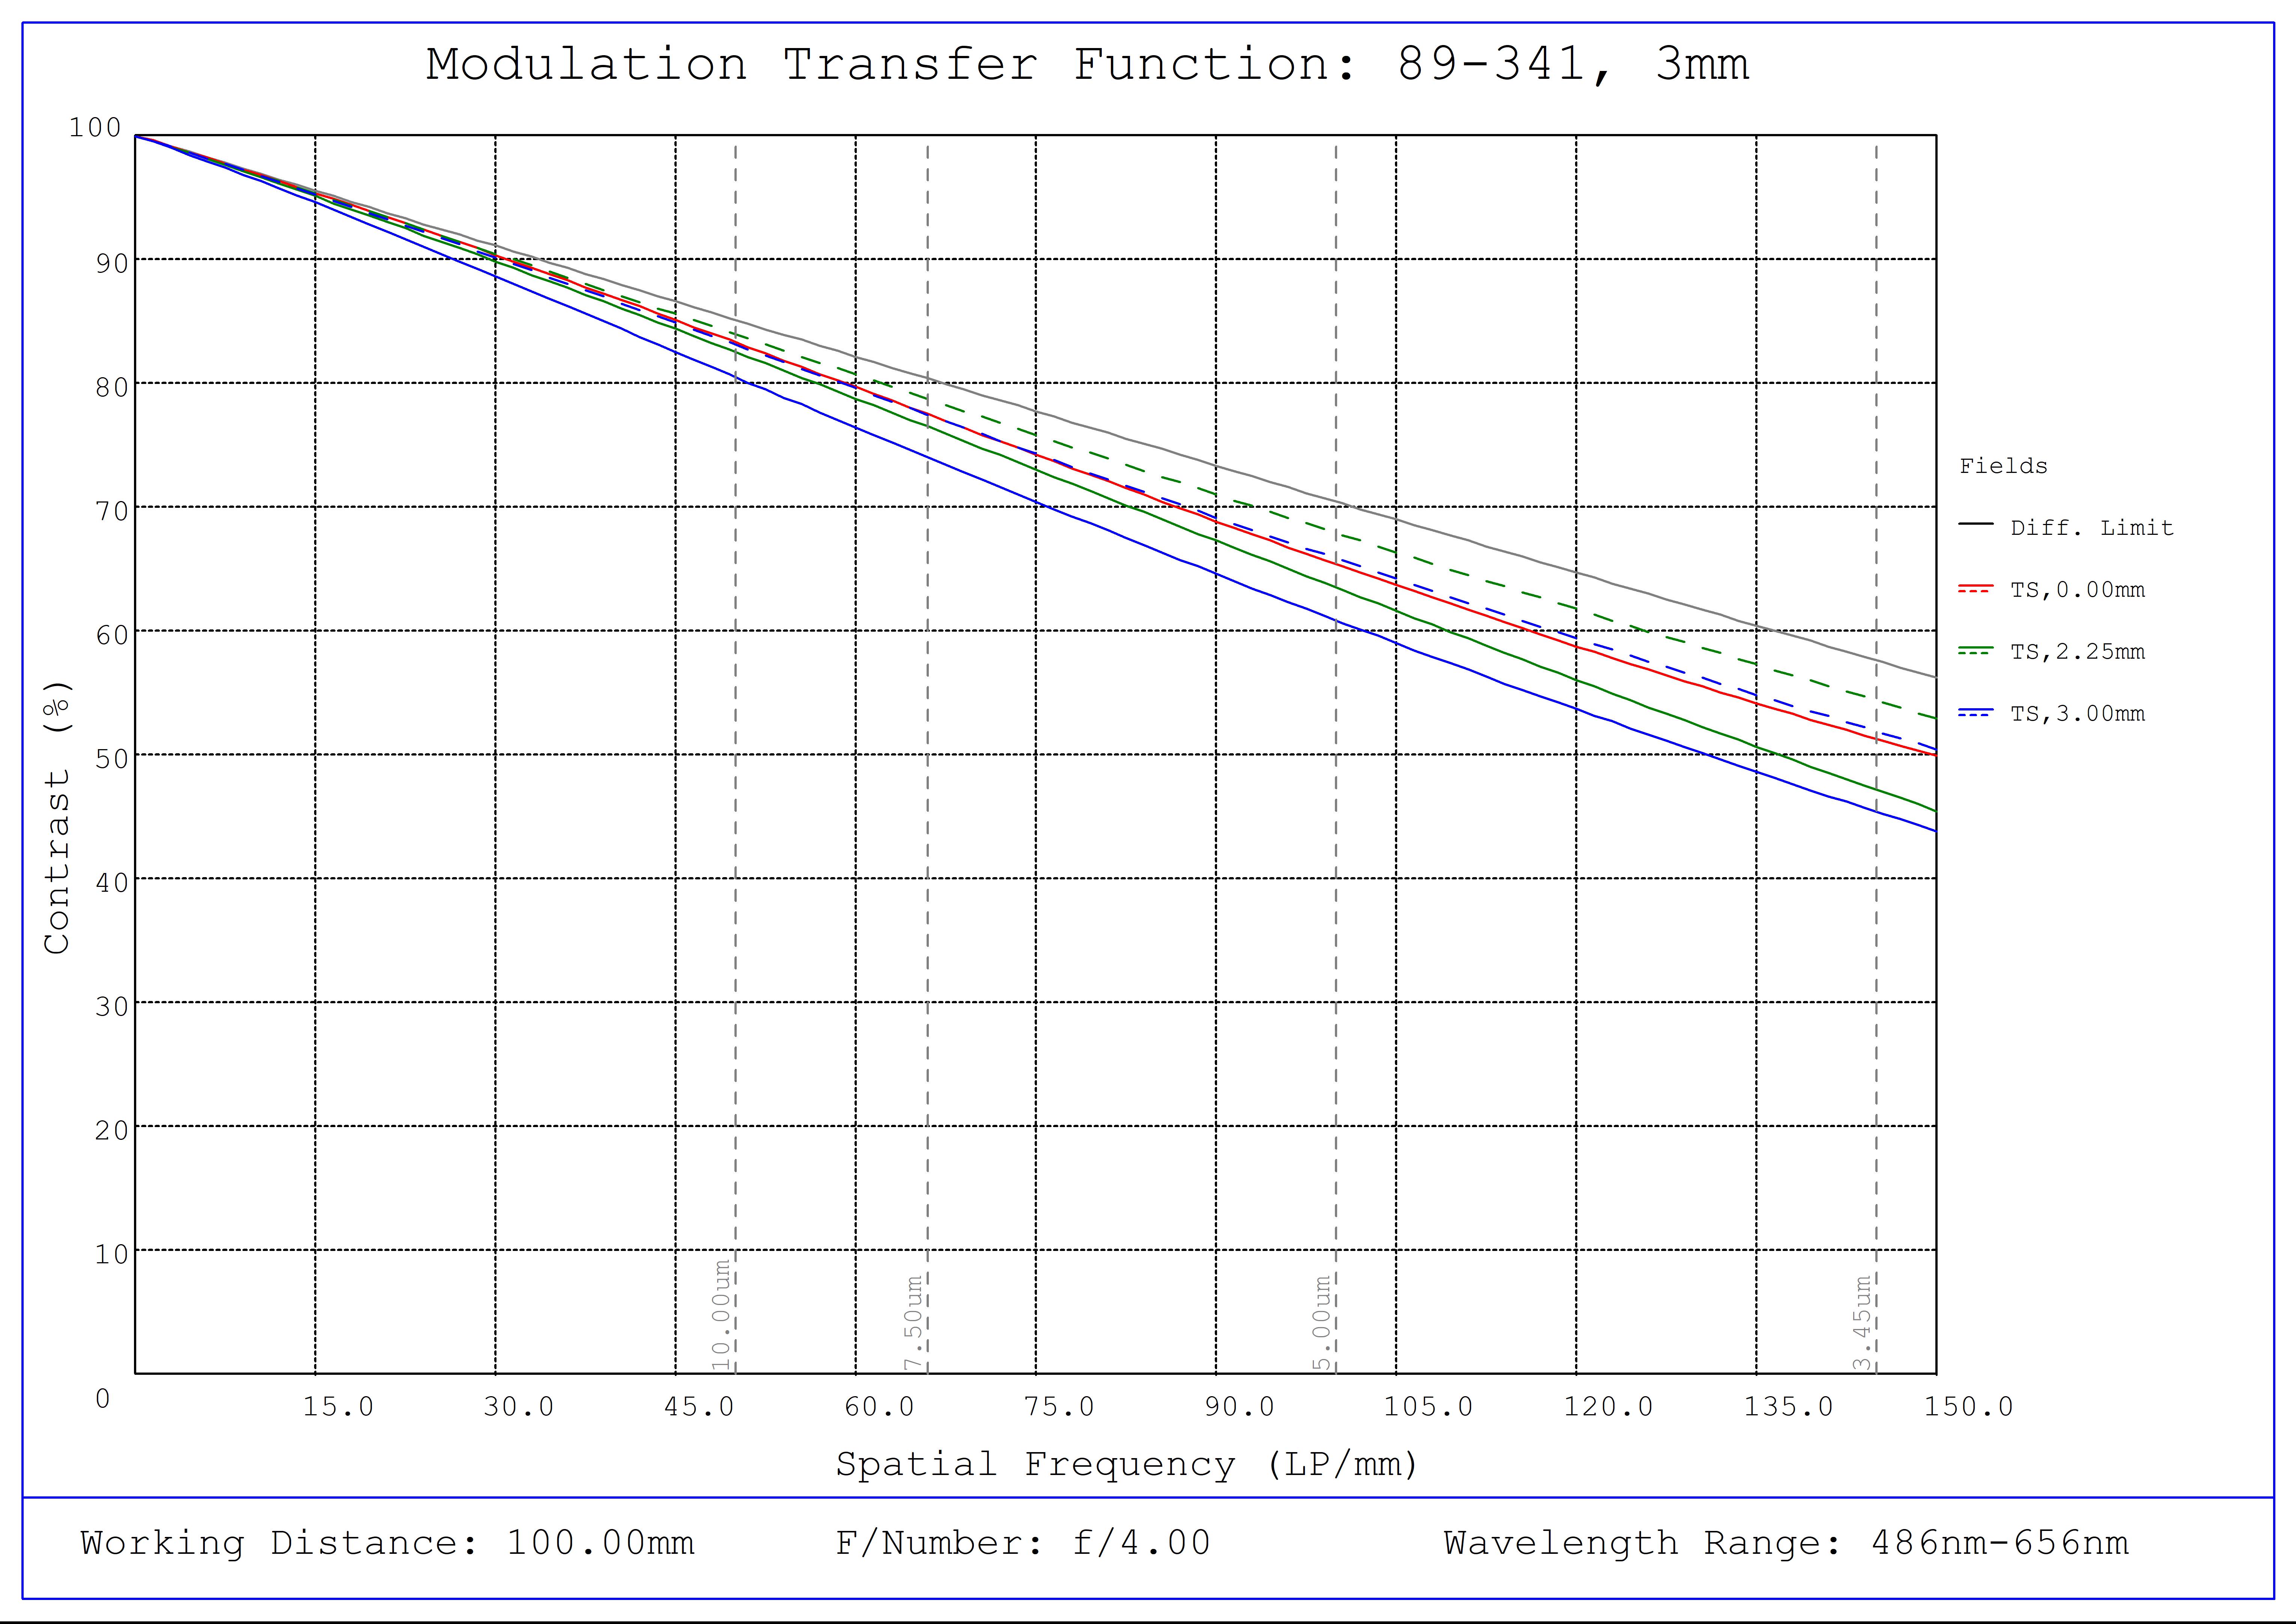 #89-341, 3mm FL f/4.0, Blue Series M12 Lens, Modulated Transfer Function (MTF) Plot, 100mm Working Distance, f4